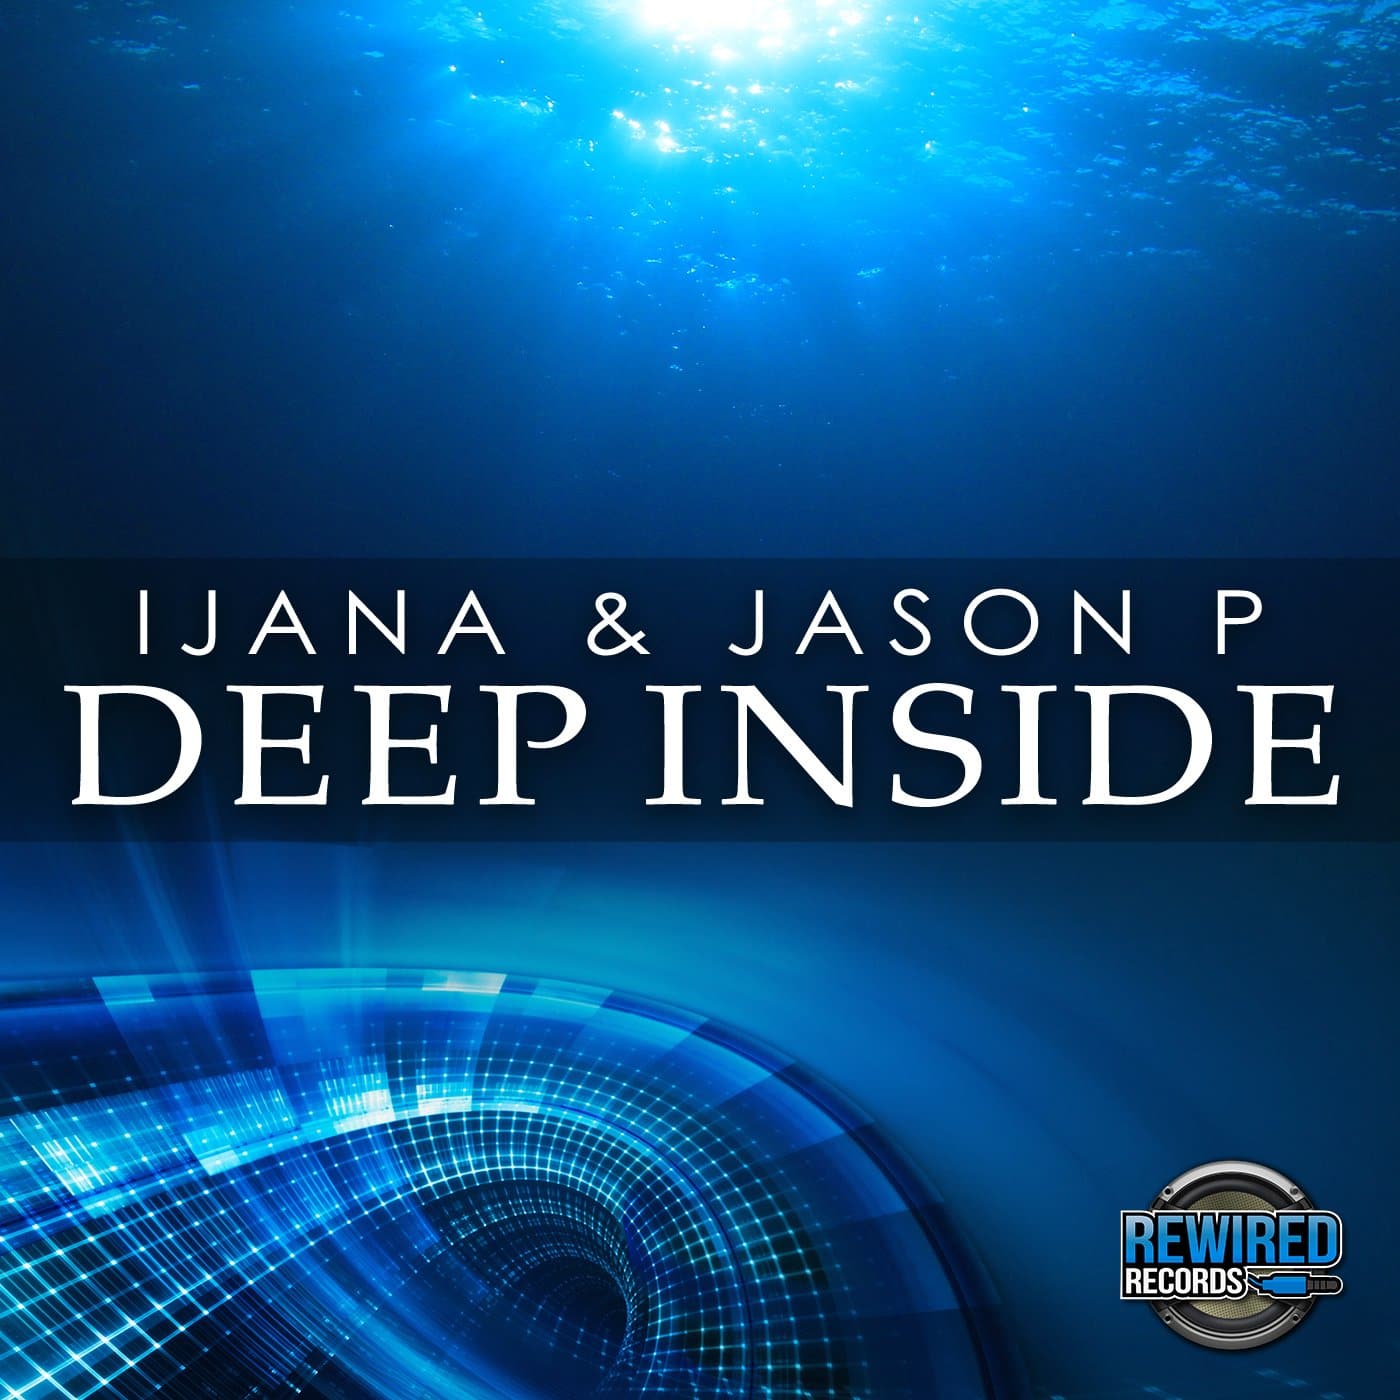 Ijana & Jason P - Deep Inside - Rewired Records